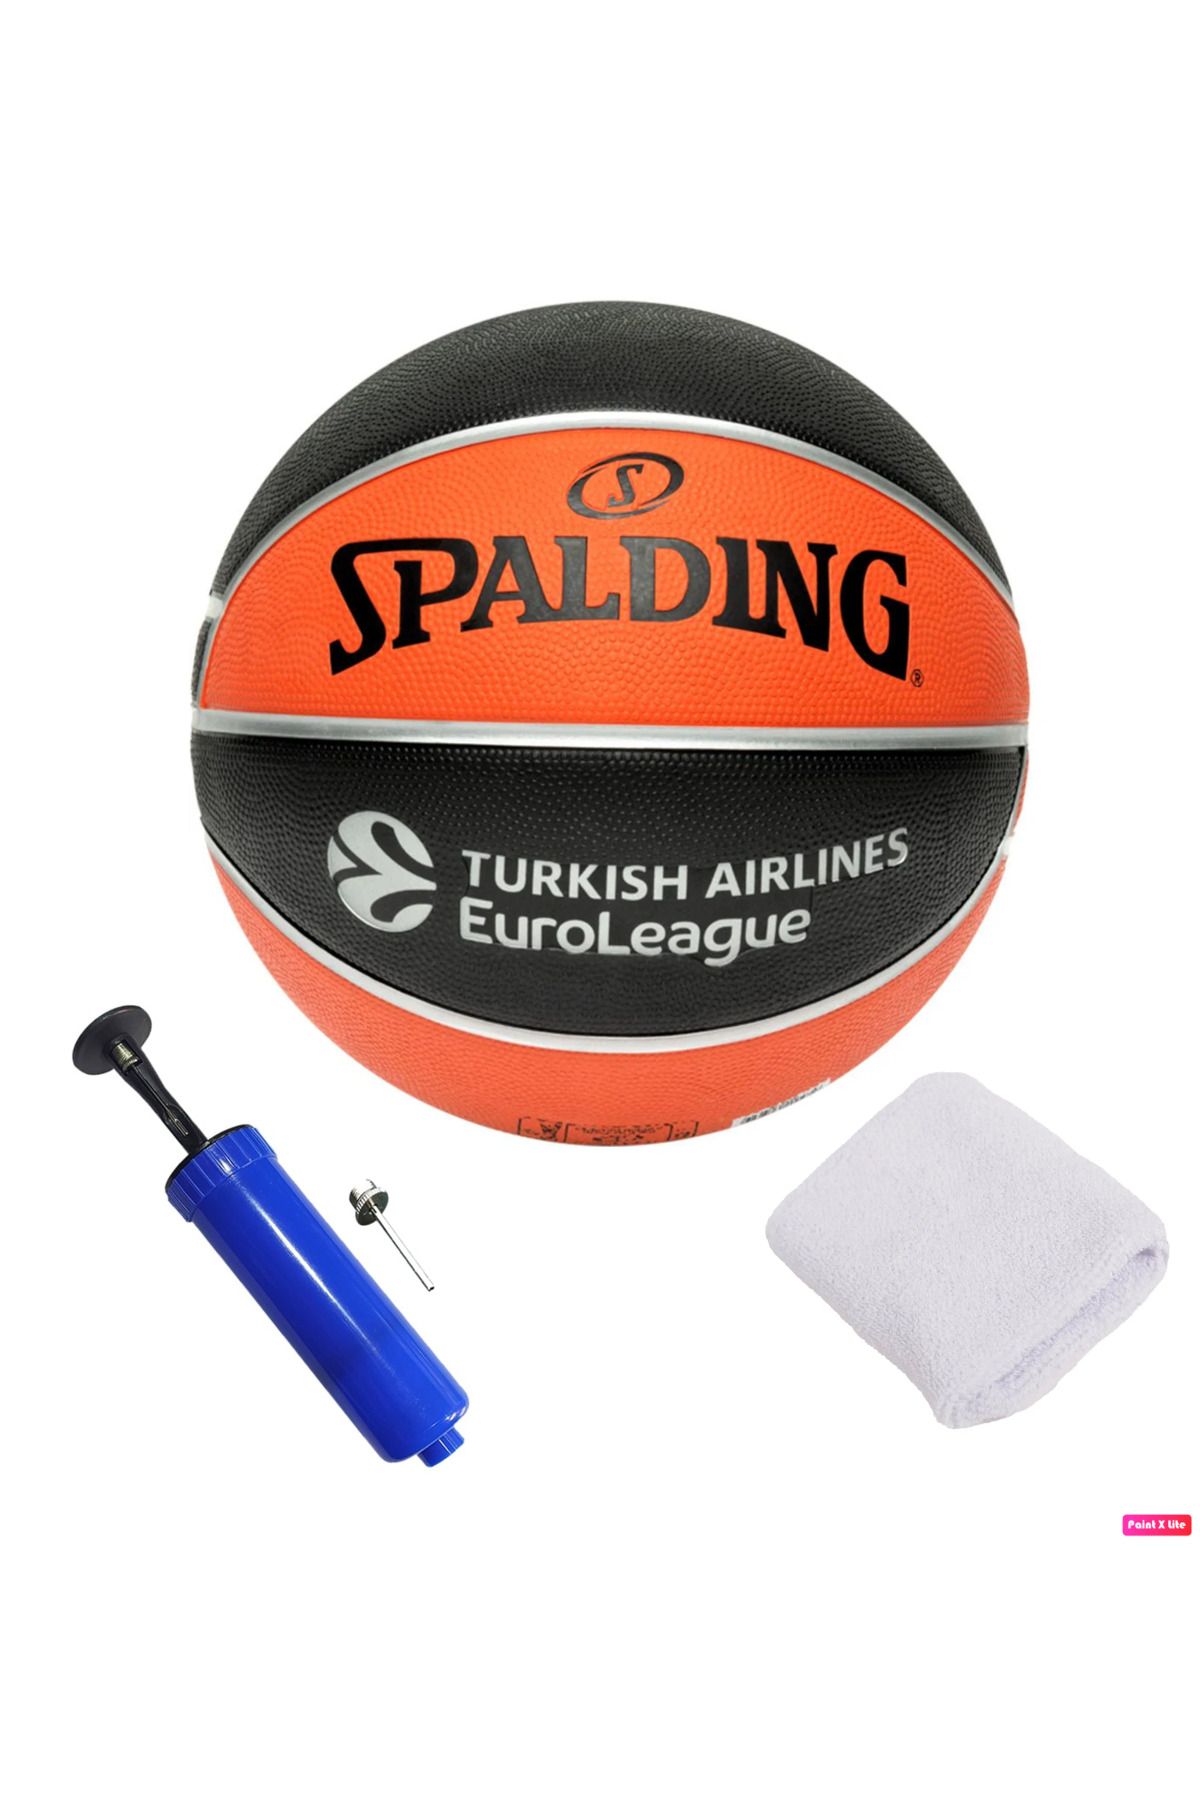 Spalding TF-150 Euroleague Kauçuk Antrenman Basketbol No 6 Outdoor Maç Topu 540 gr + Pompa + Havlu Bileklik